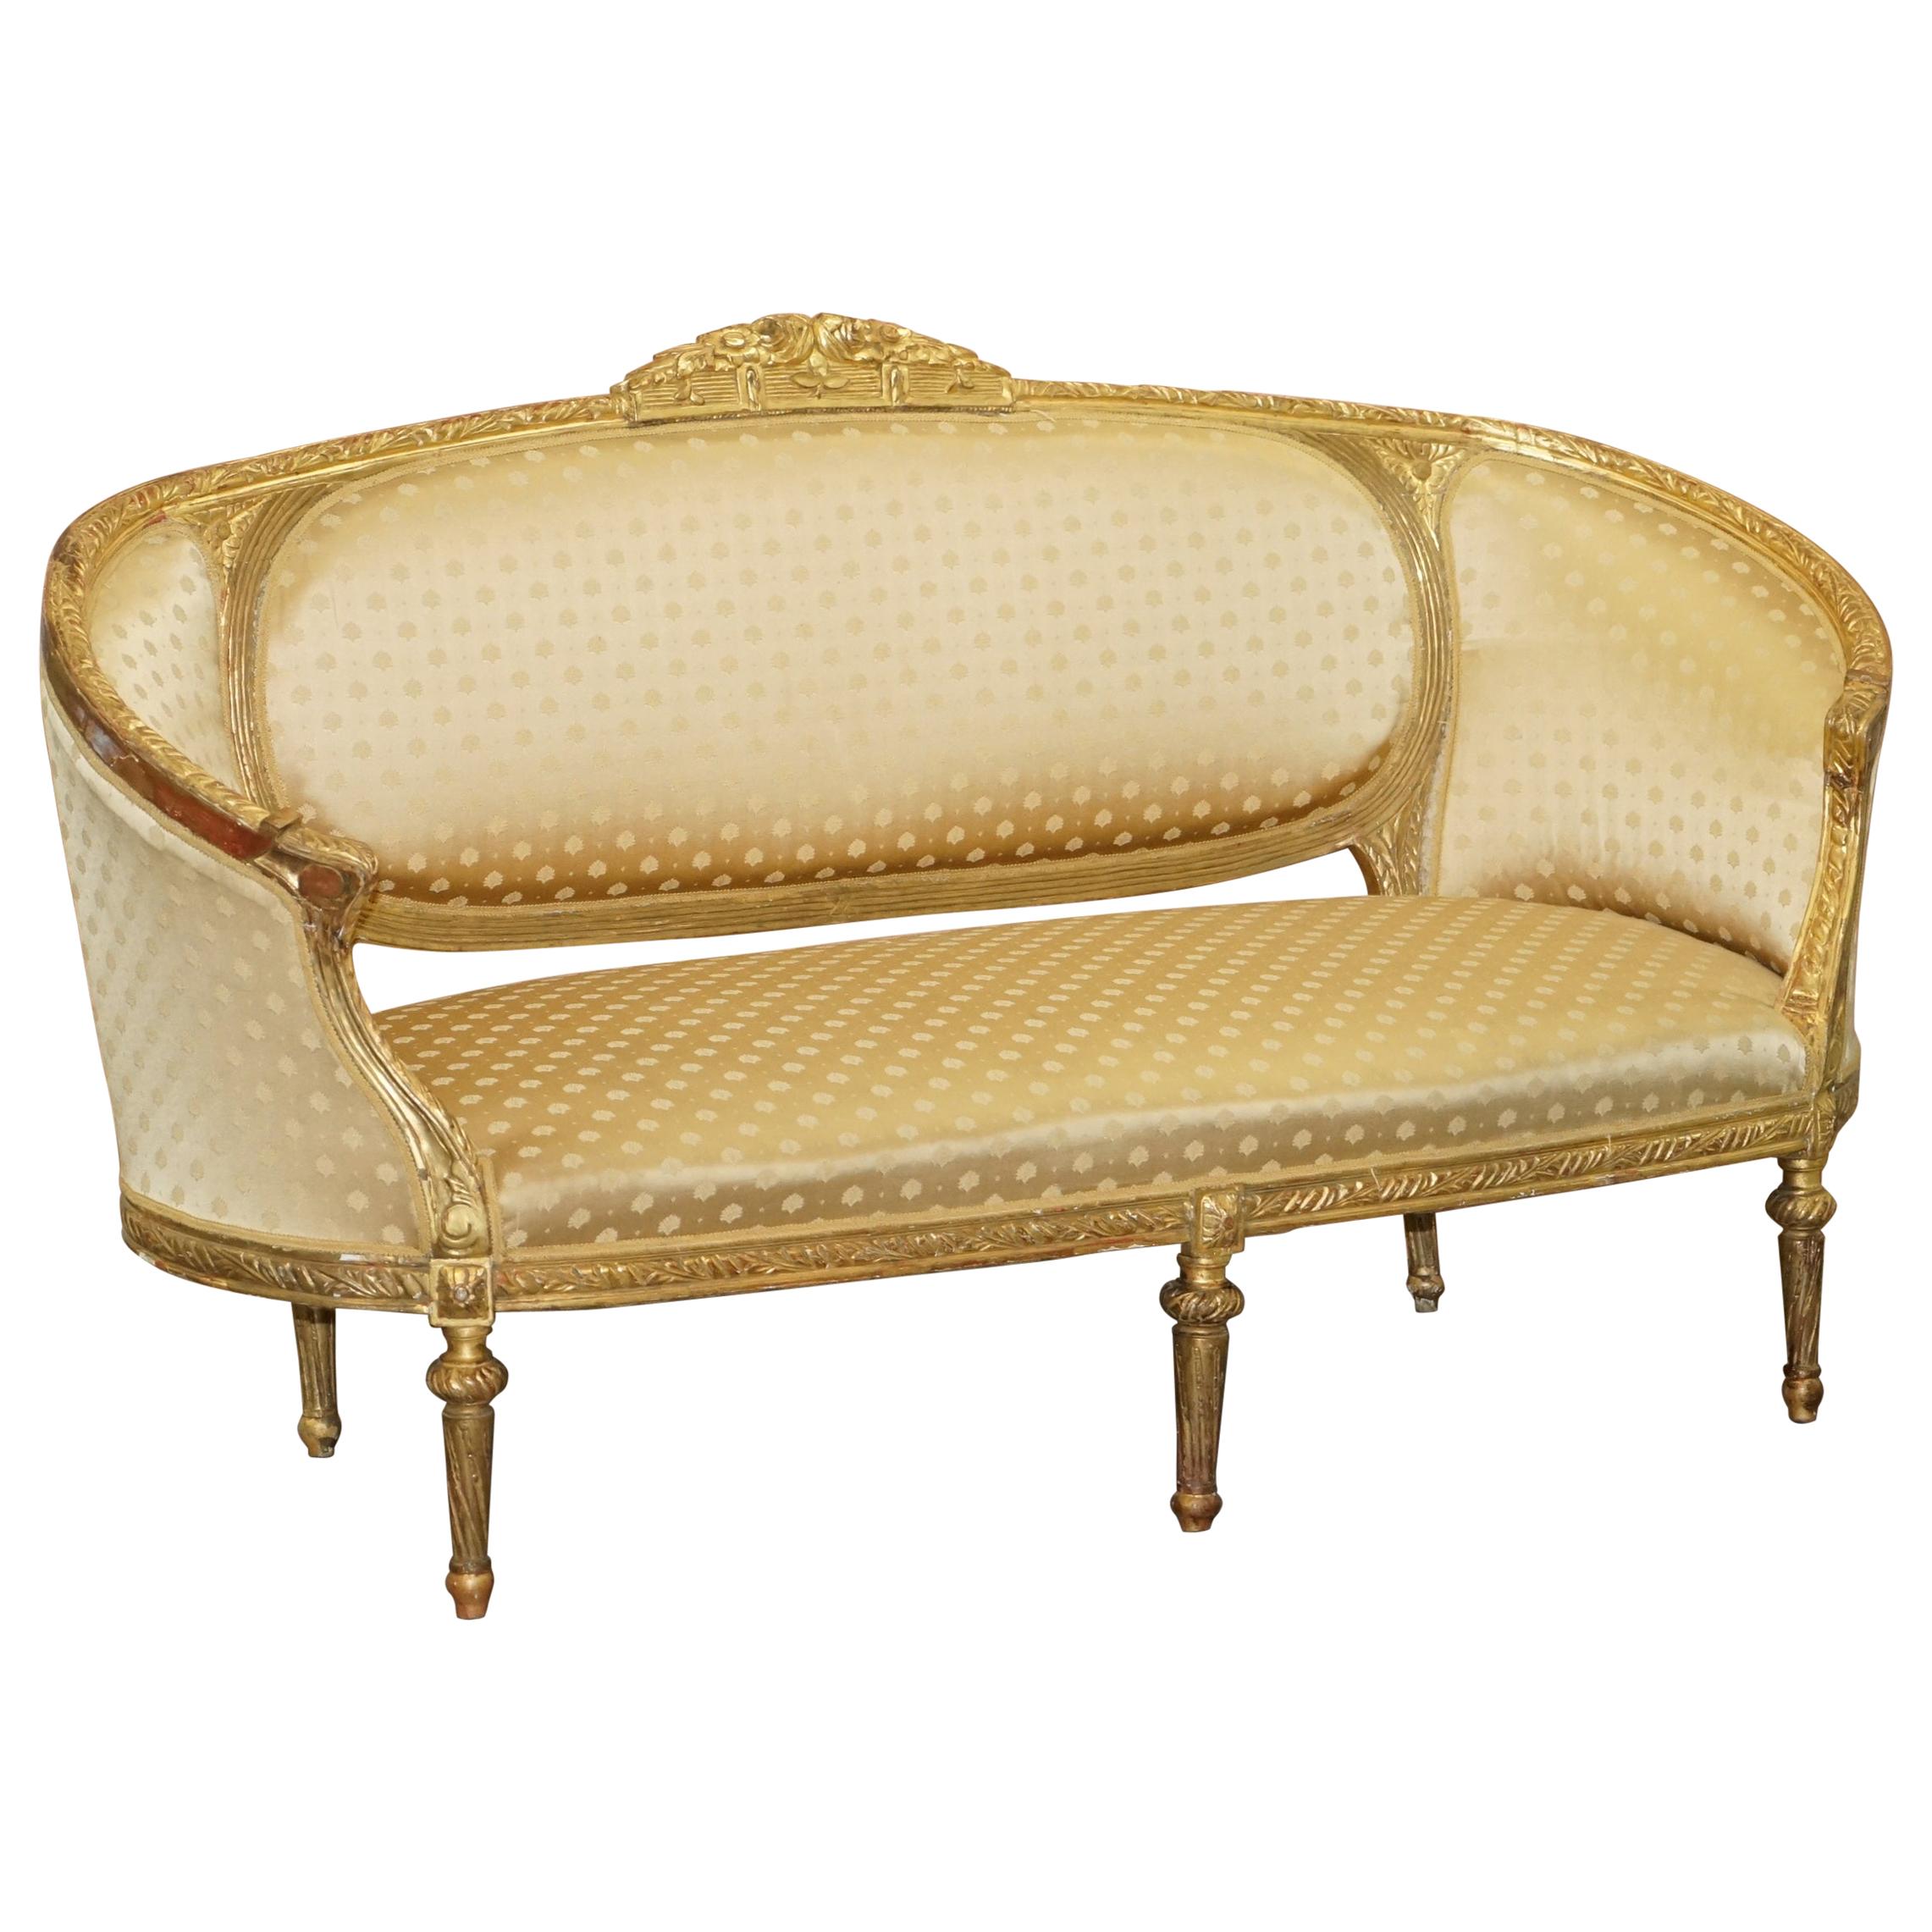 Stunning French Giltwood Napoleon III circa 1870 Salon Sofa Settee Part of Suite